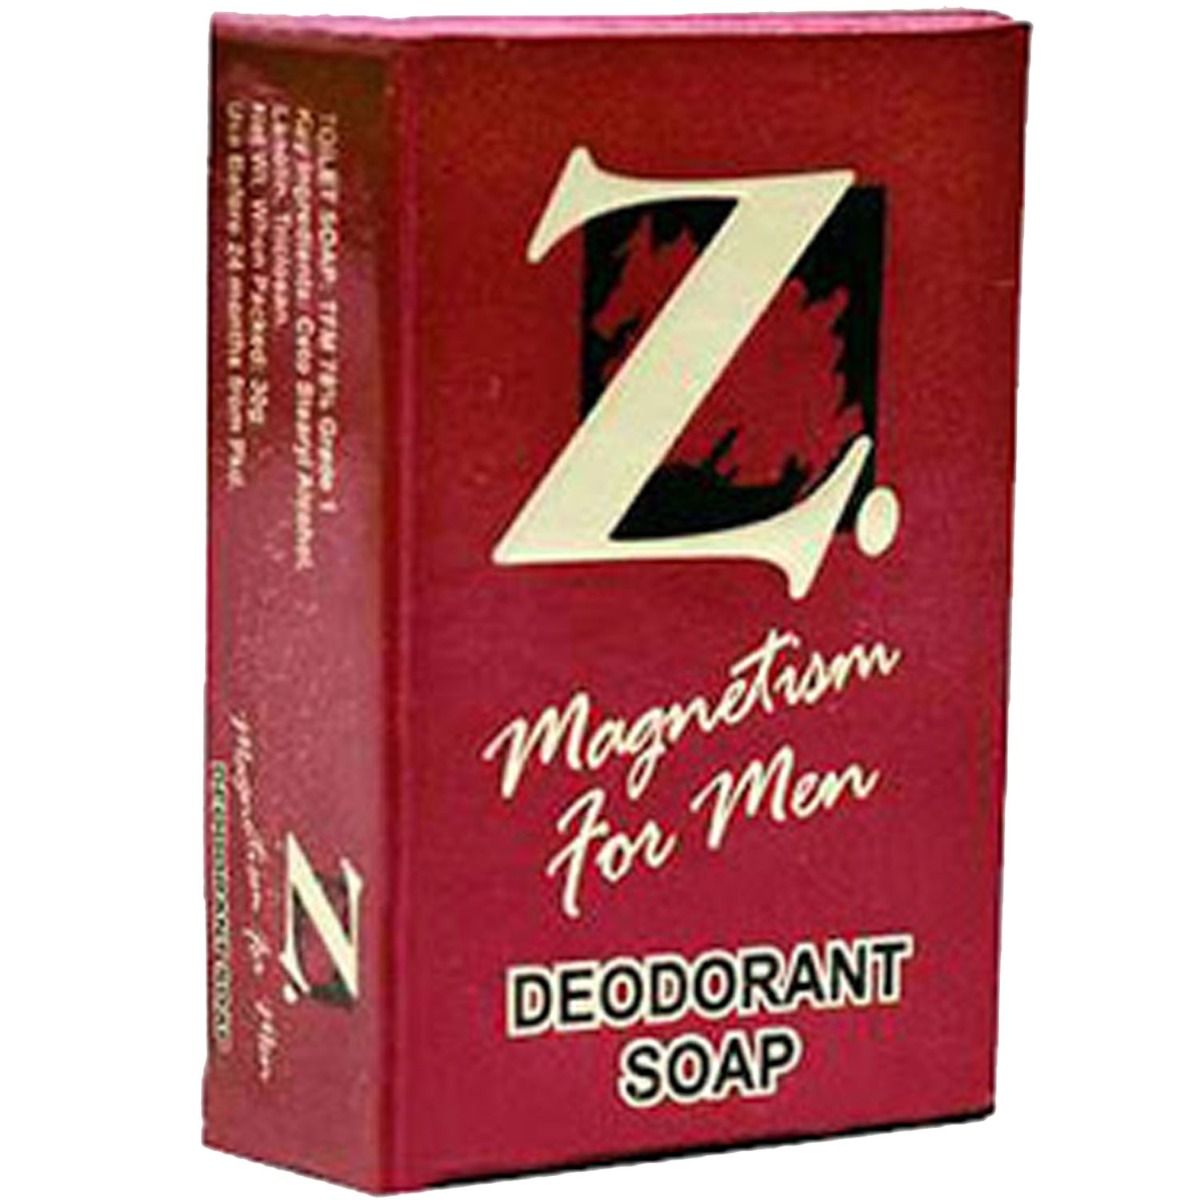 Buy Z Deodorant Soap Magnetism For Men, 75 gm Online